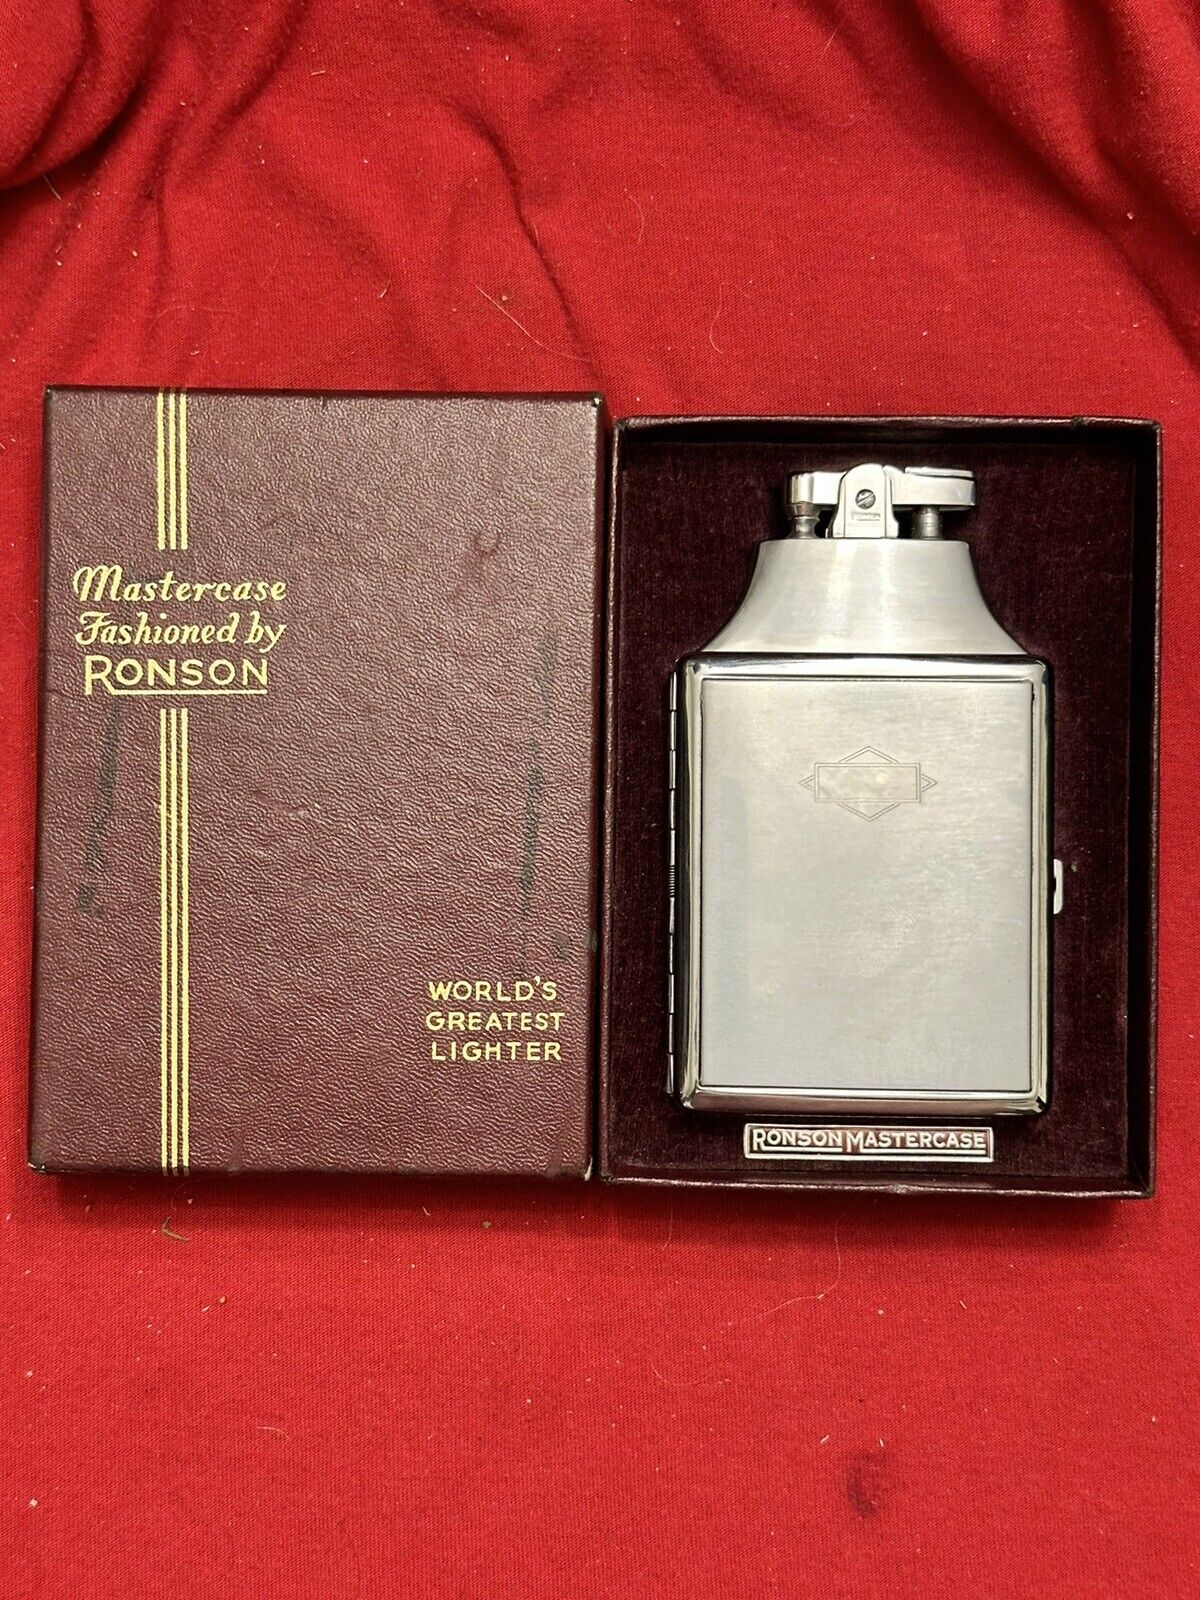 Vintage New Ronson Master case Cigarette Case Lighter With Original Box